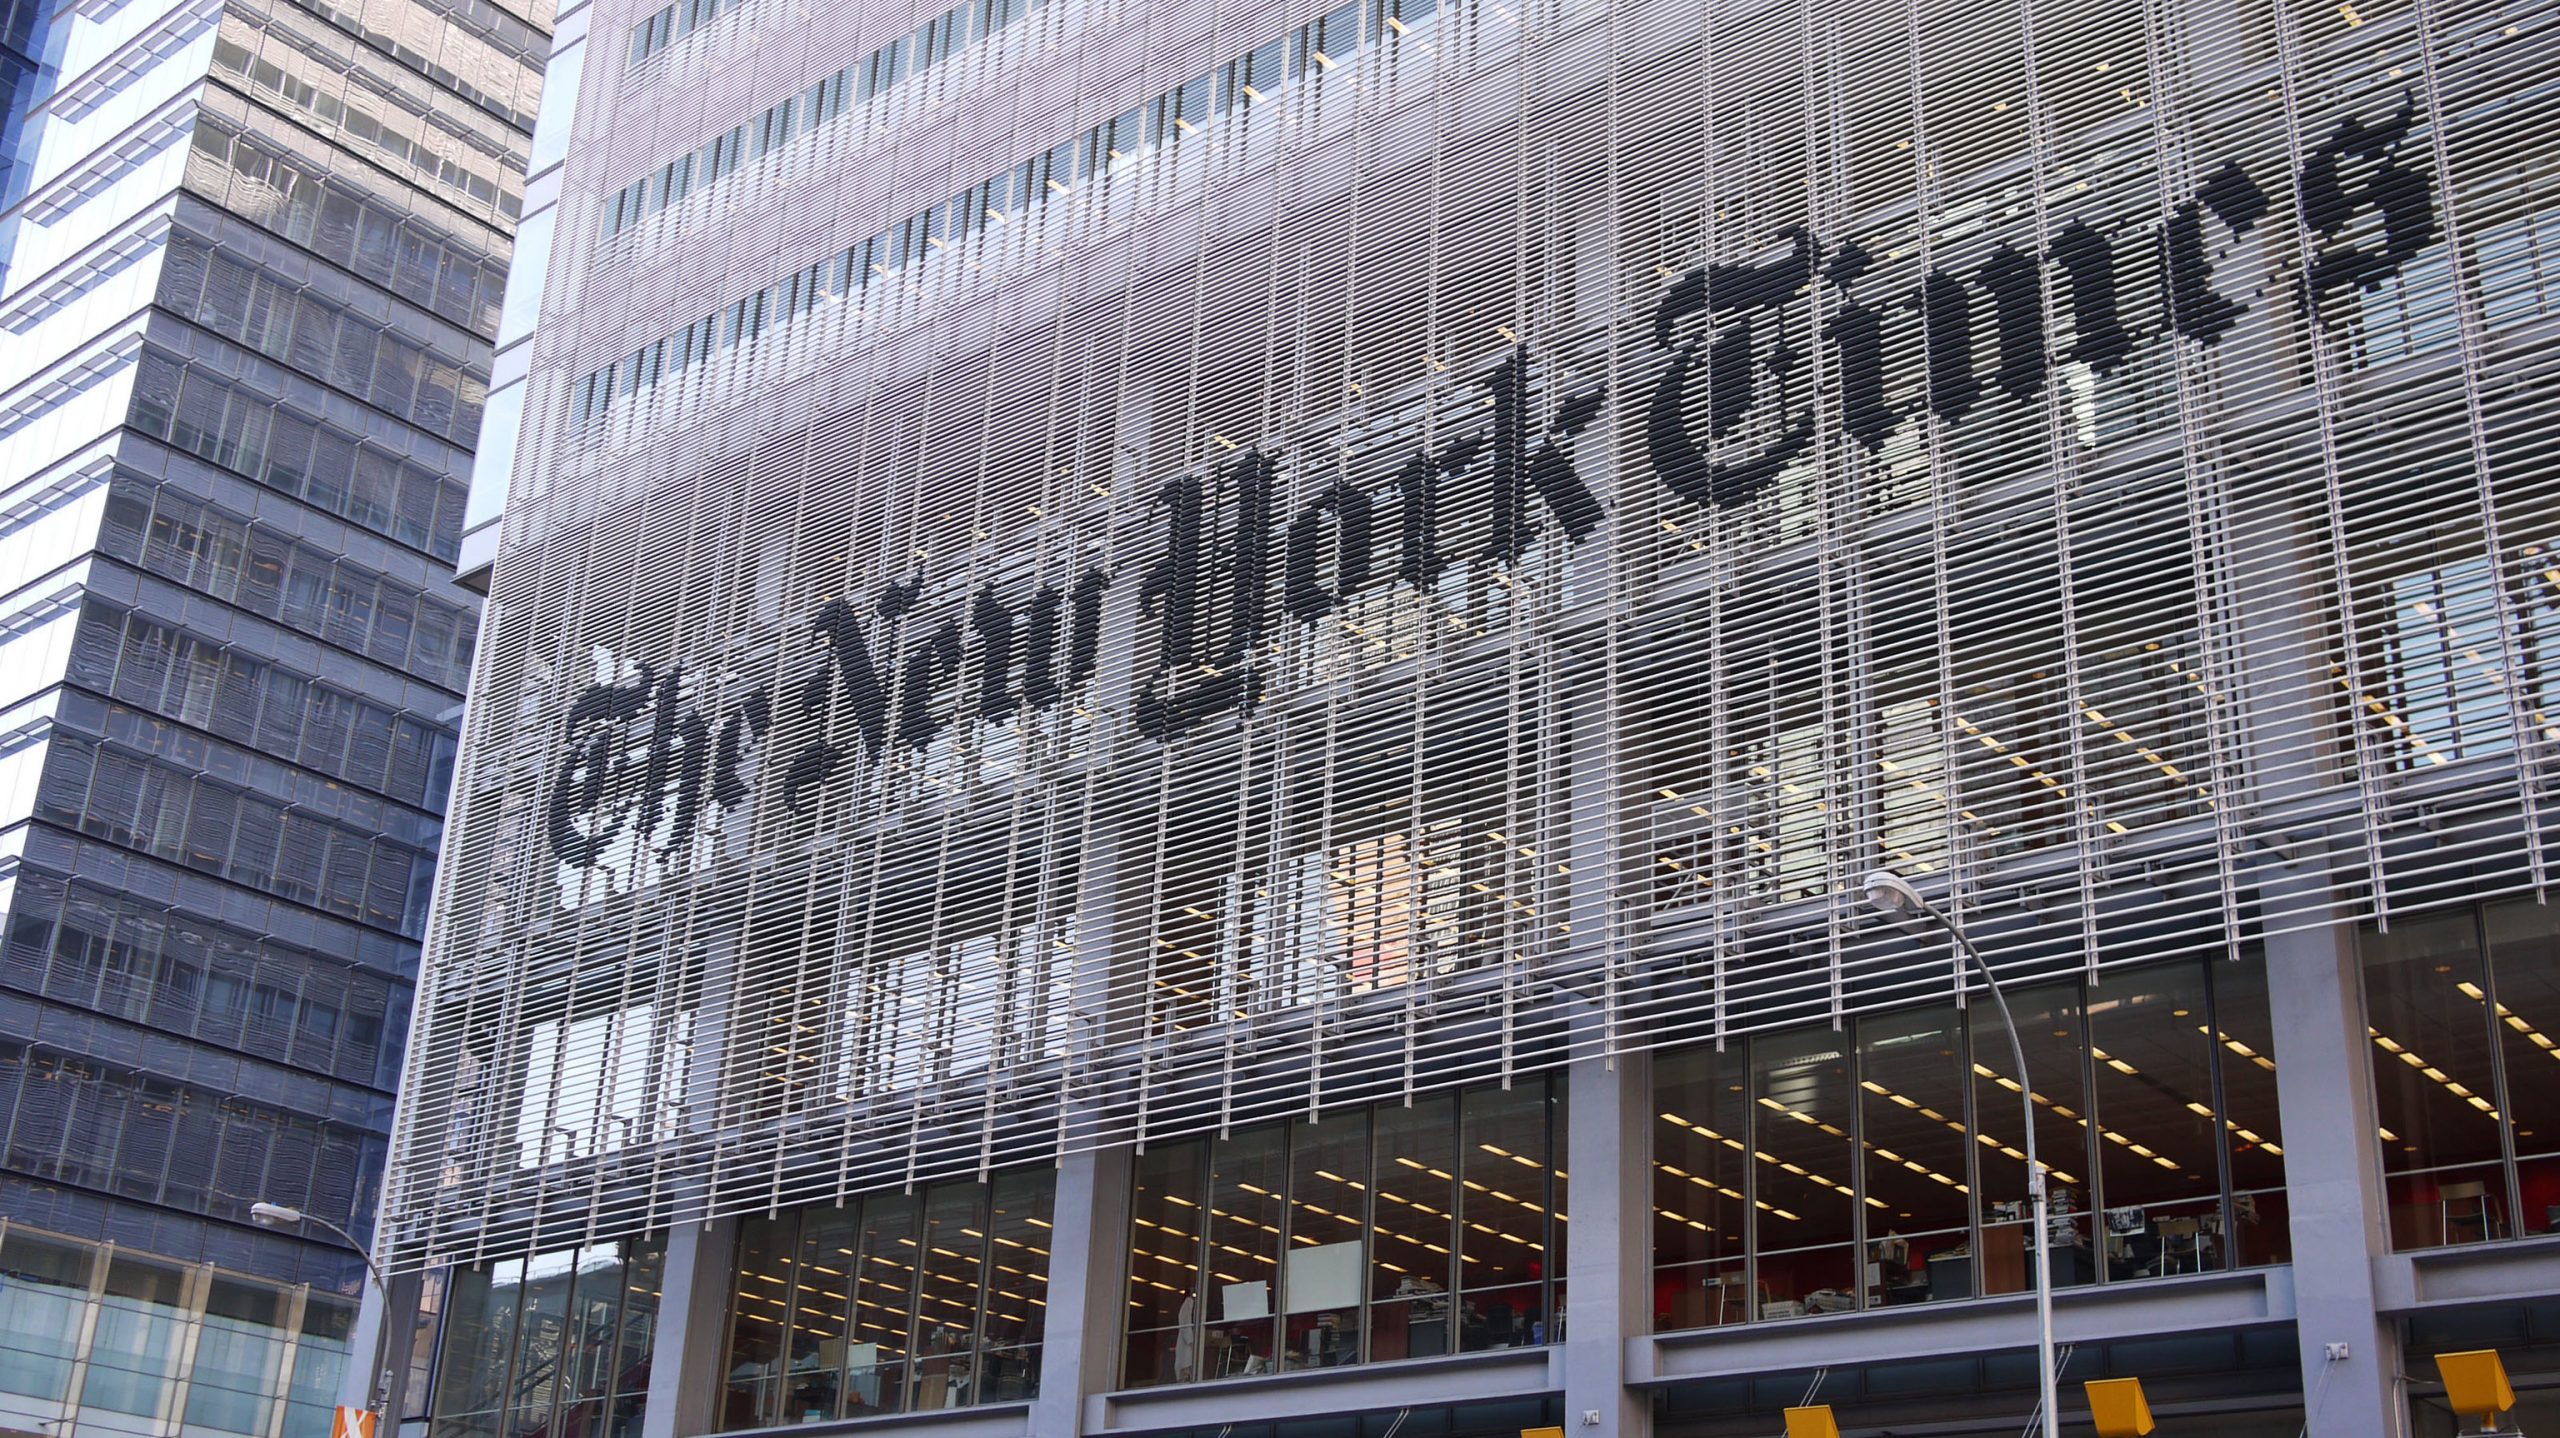 The New York Times building, New York. (Credit: samchills/ Flickr)